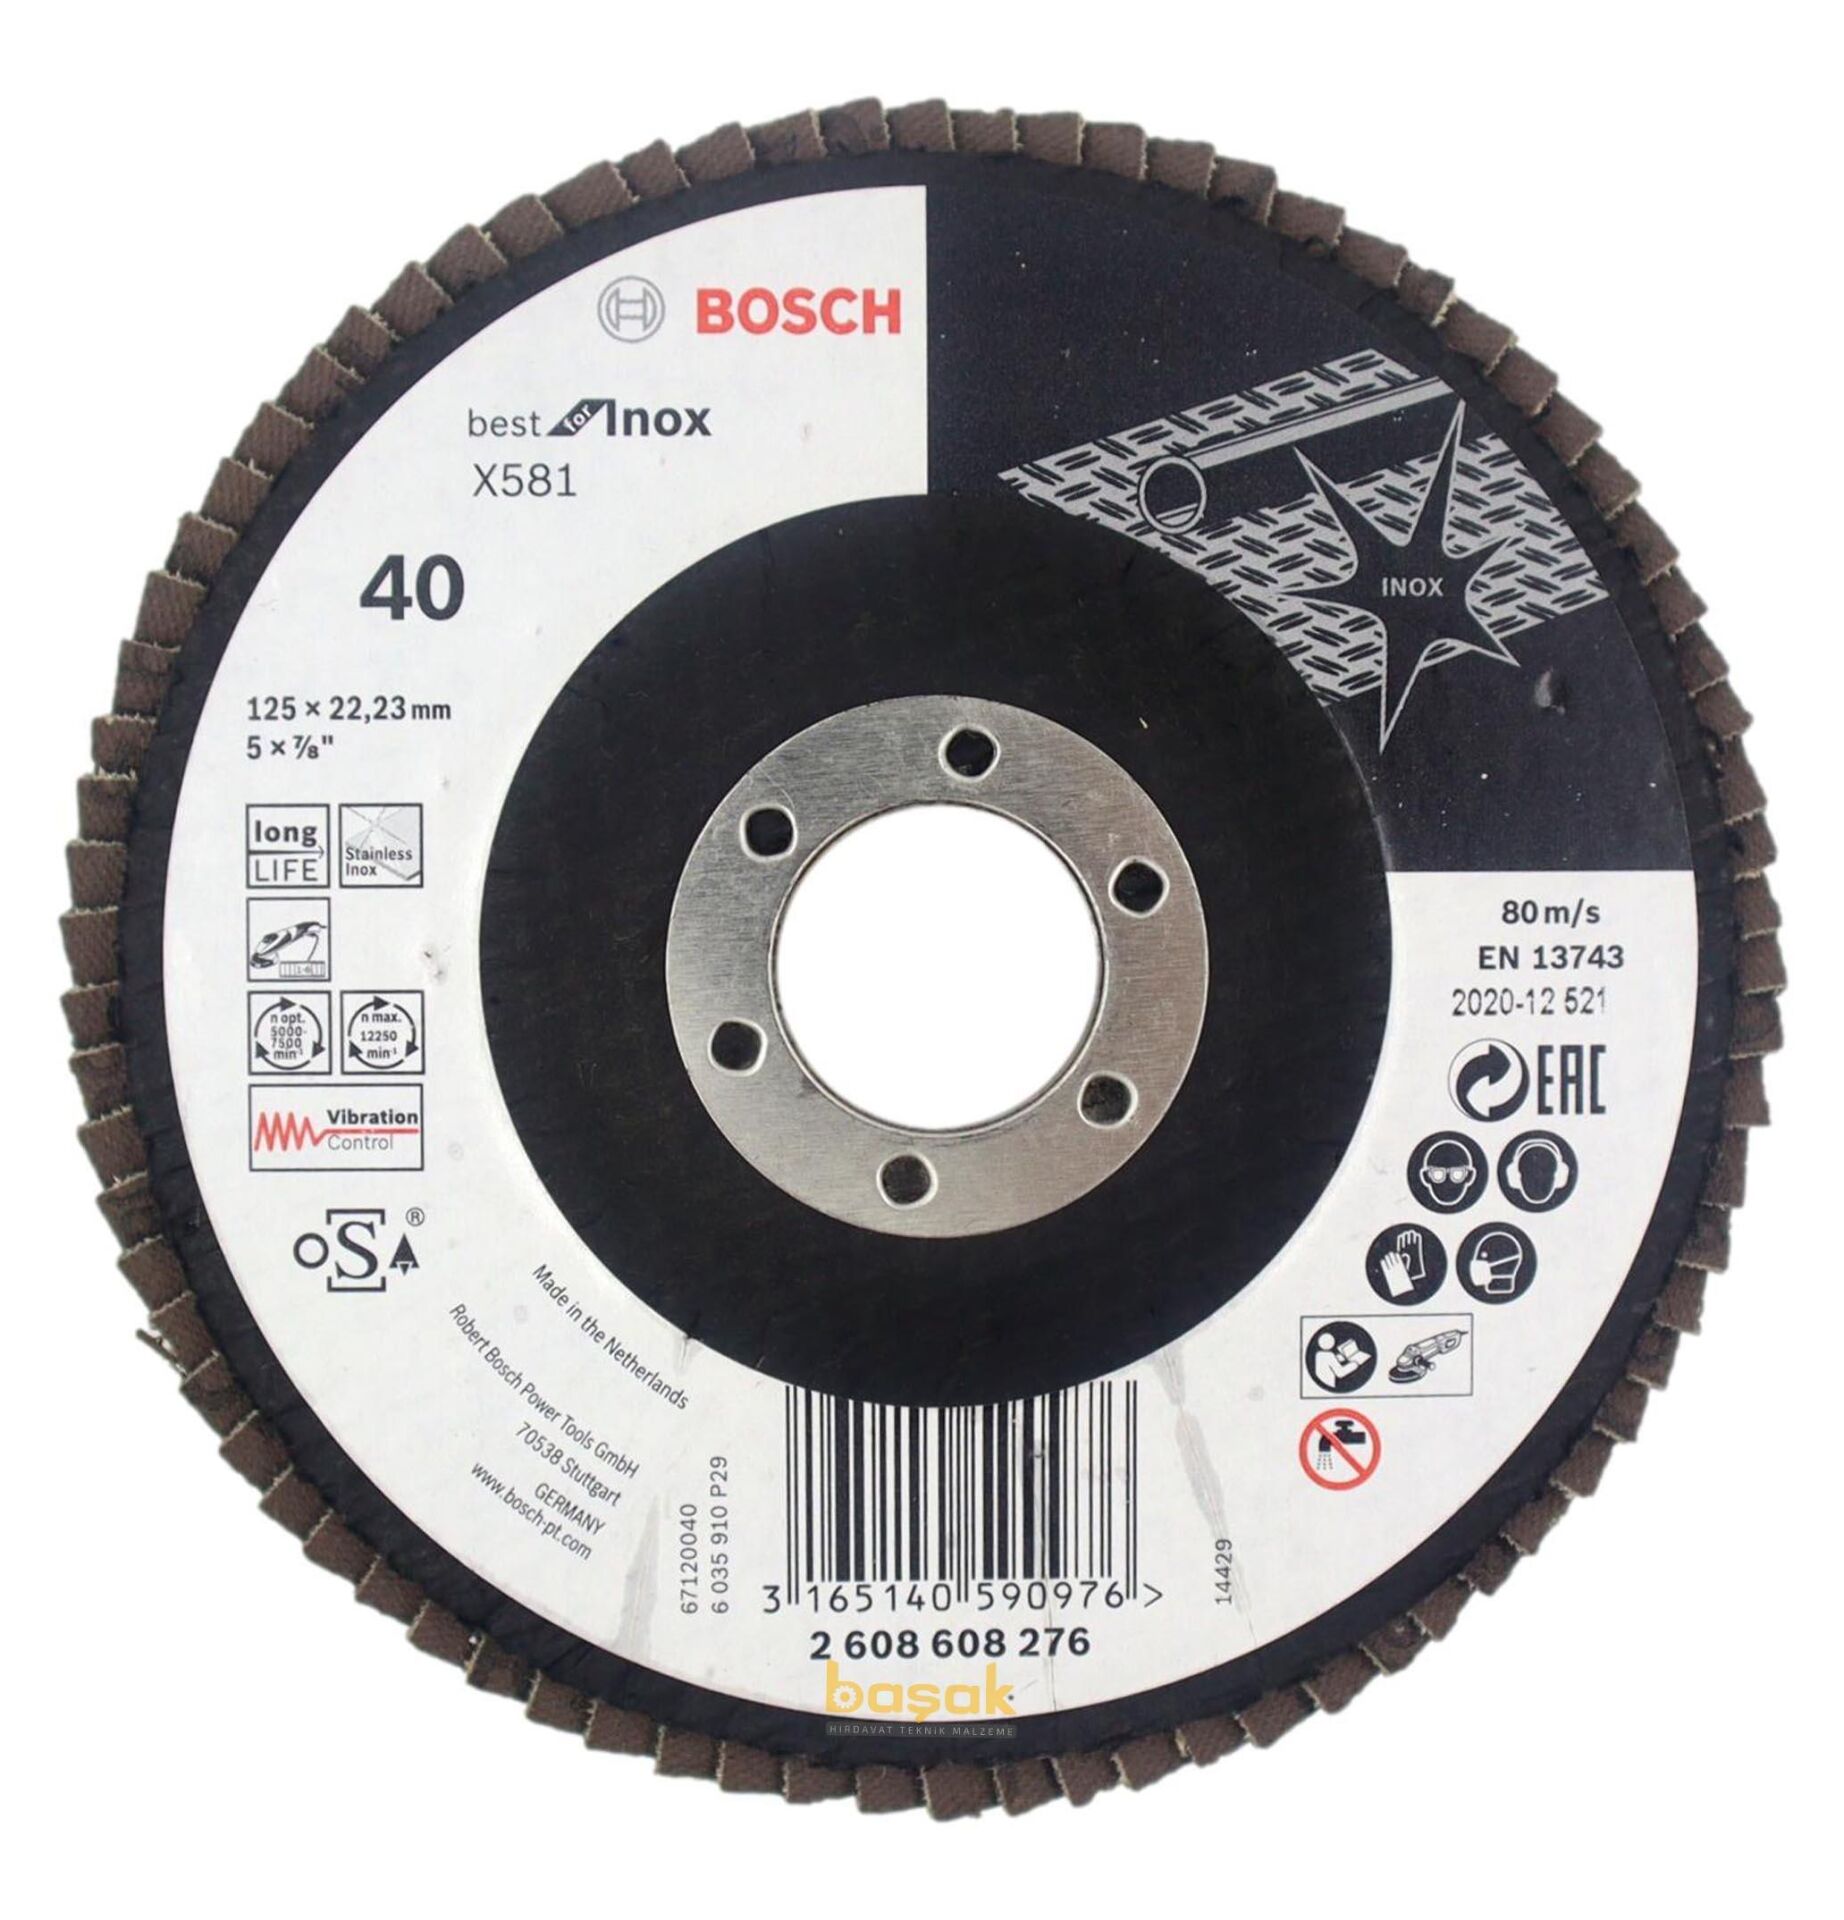 Bosch 125 mm 40 Kum X581 Best Inox Flap Disk 2608608276